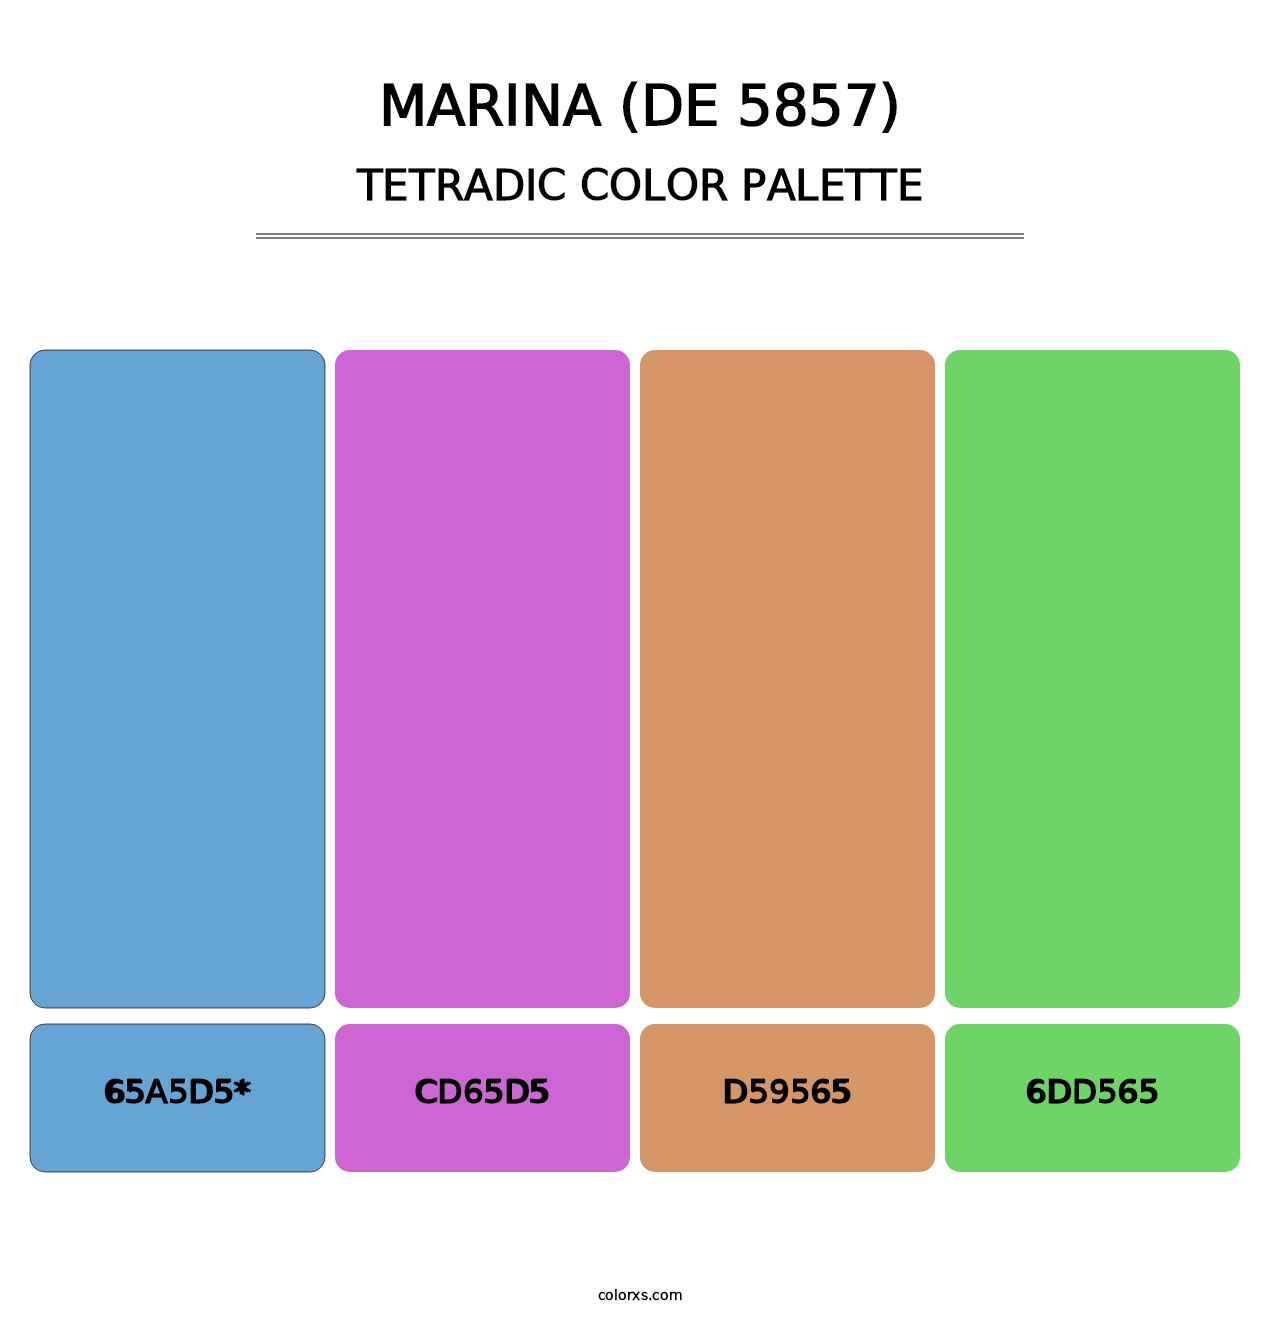 Marina (DE 5857) - Tetradic Color Palette